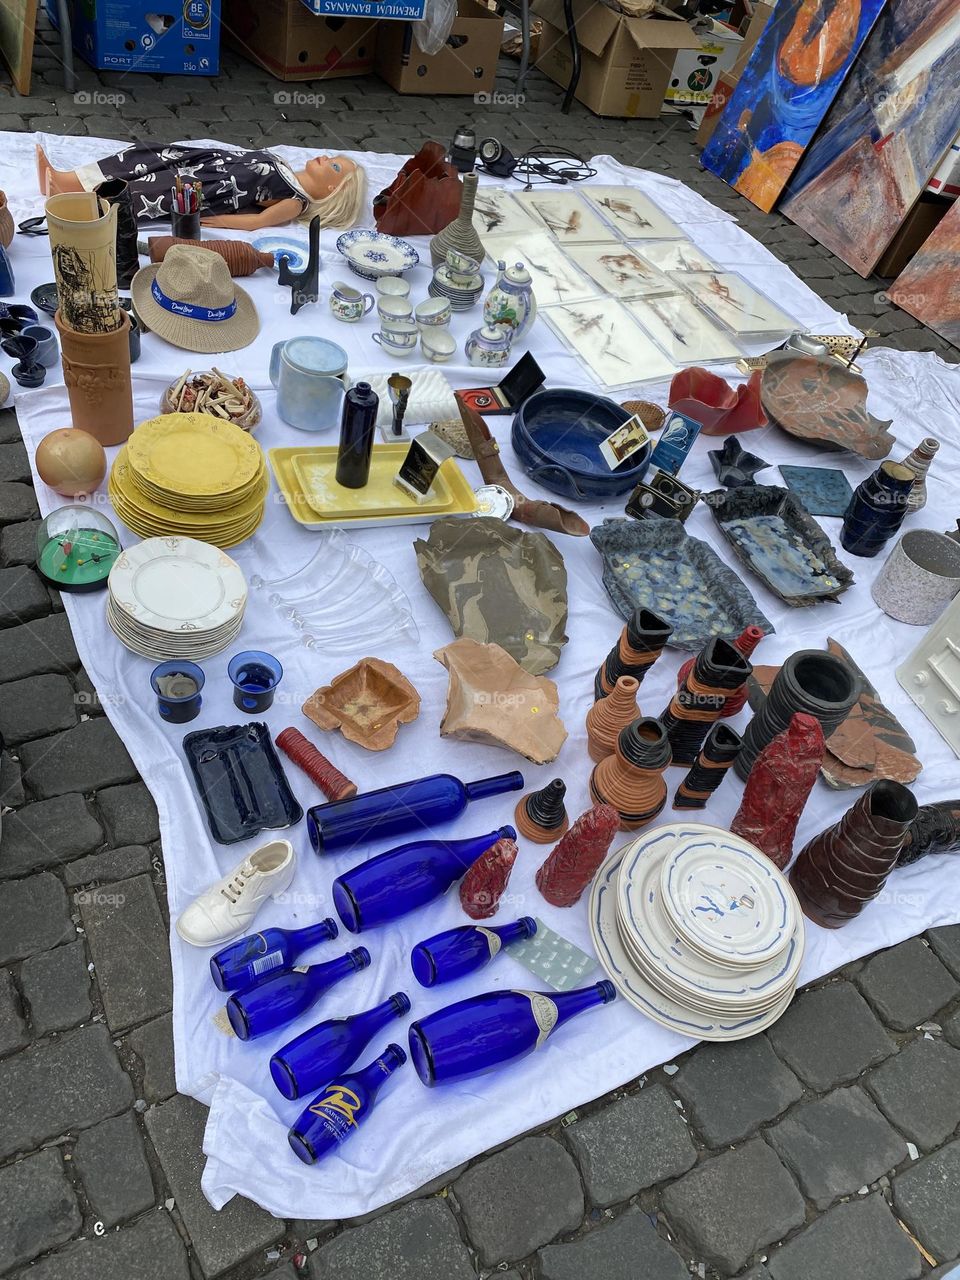 Flee market, antique market, vintage market, second hand market, bruxelles, Brussels Flee market, old items, sustainability, ceramic, glass